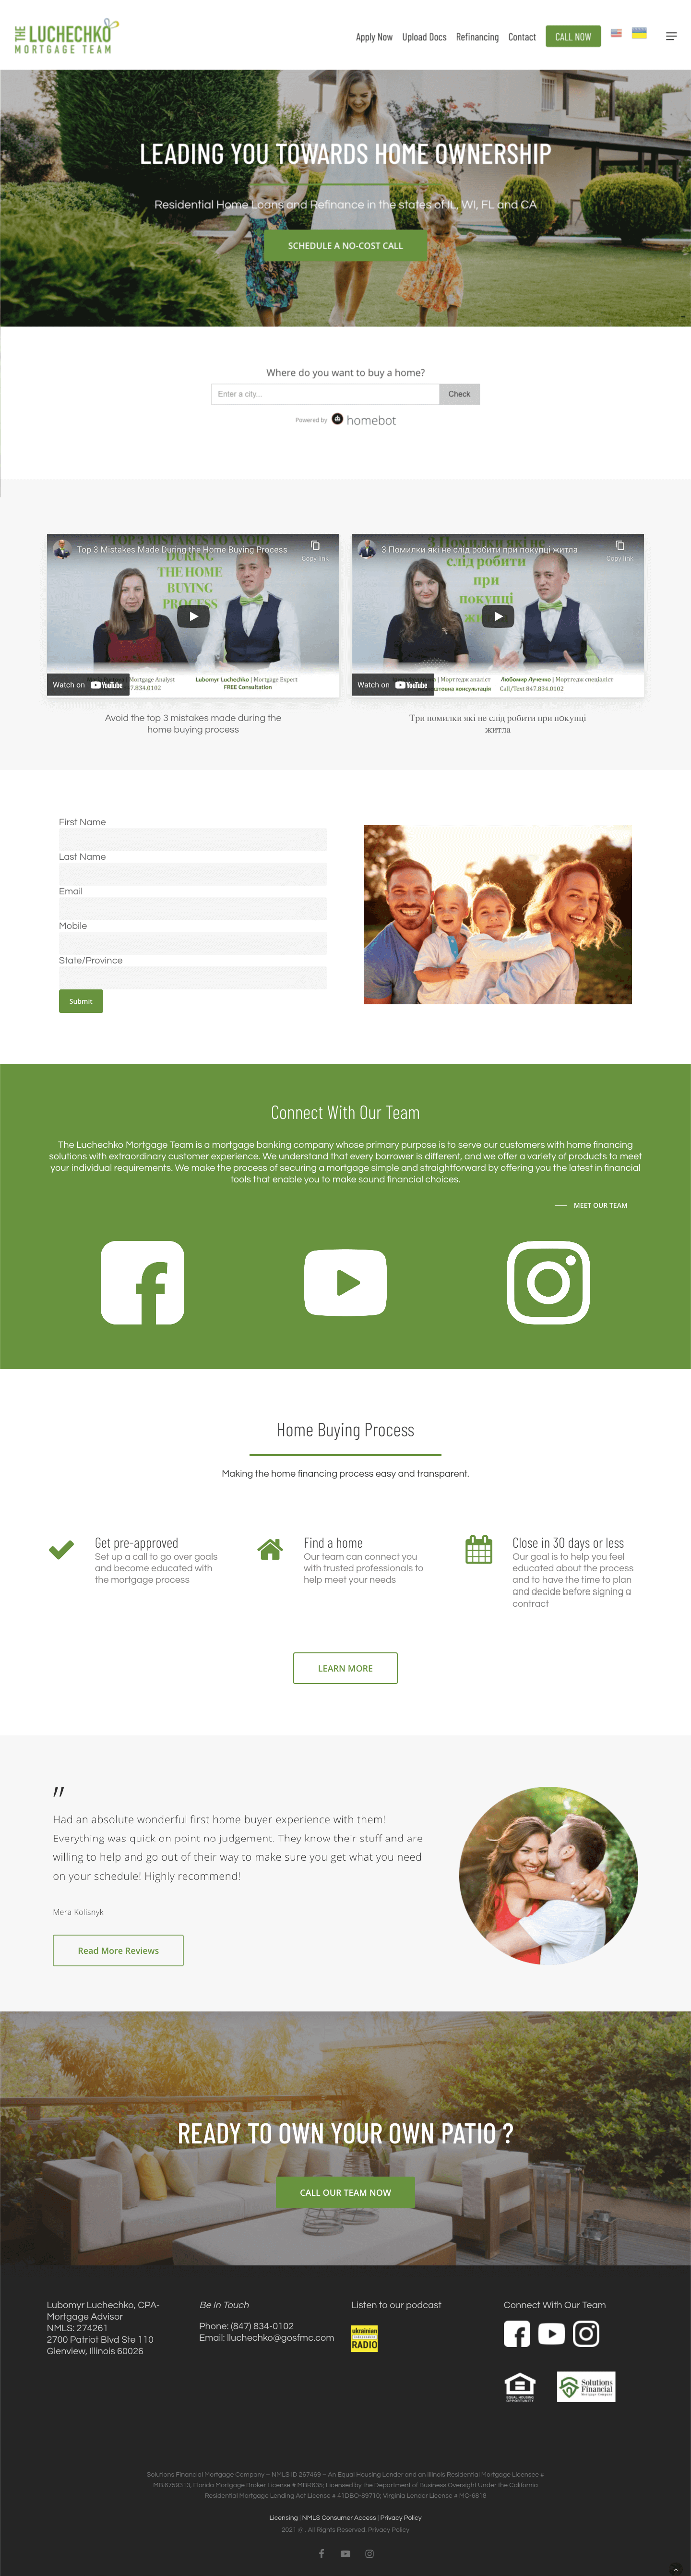 Luchenchko mortgage full web landing page - web design firm Big Red Jelly Provo Utah.